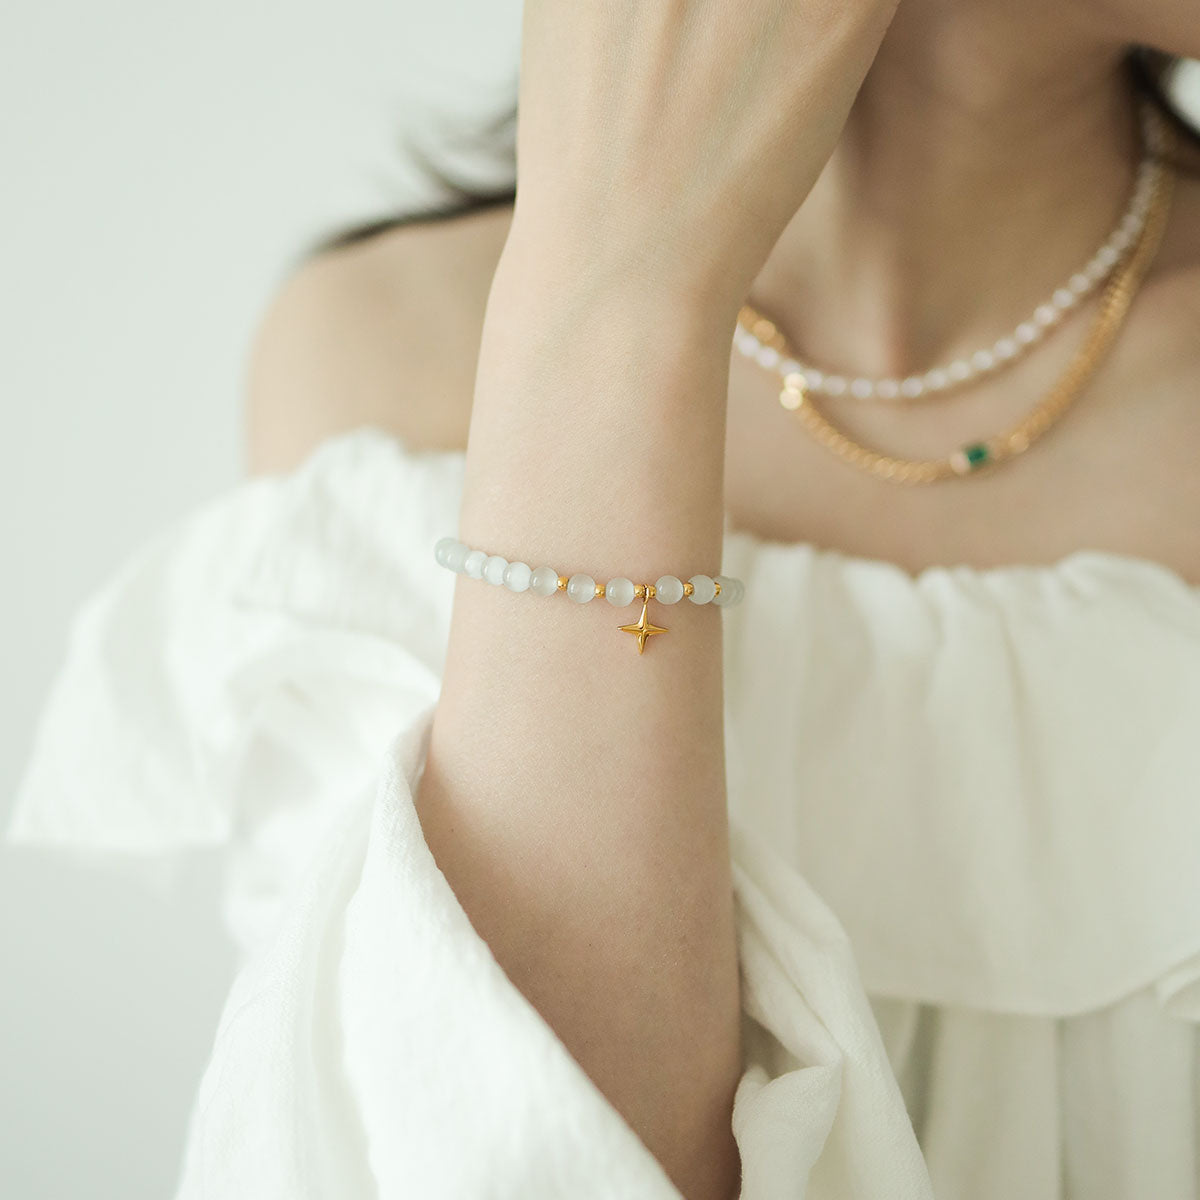 Women wear a star bracelet and pearl necklace.